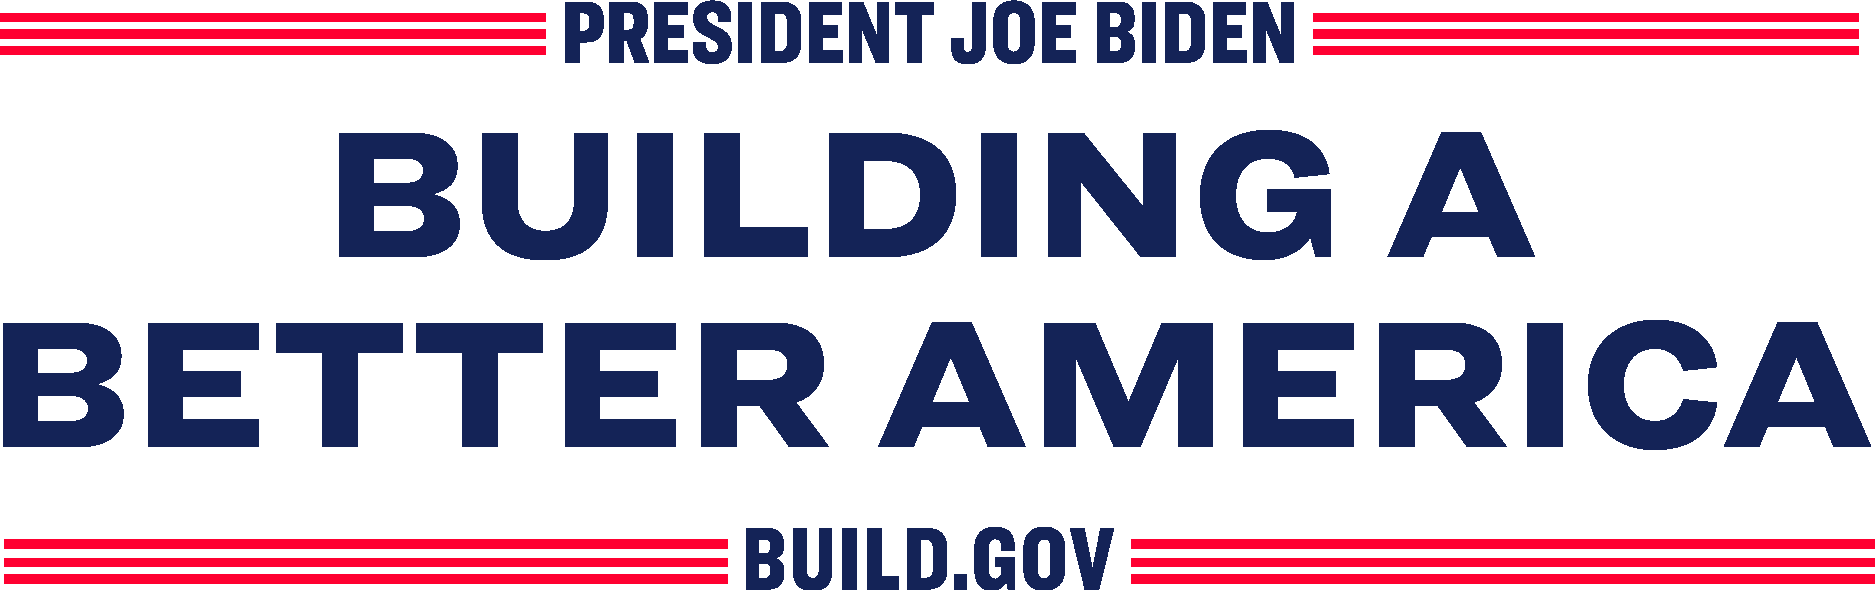 Building a Better America Logo Vector